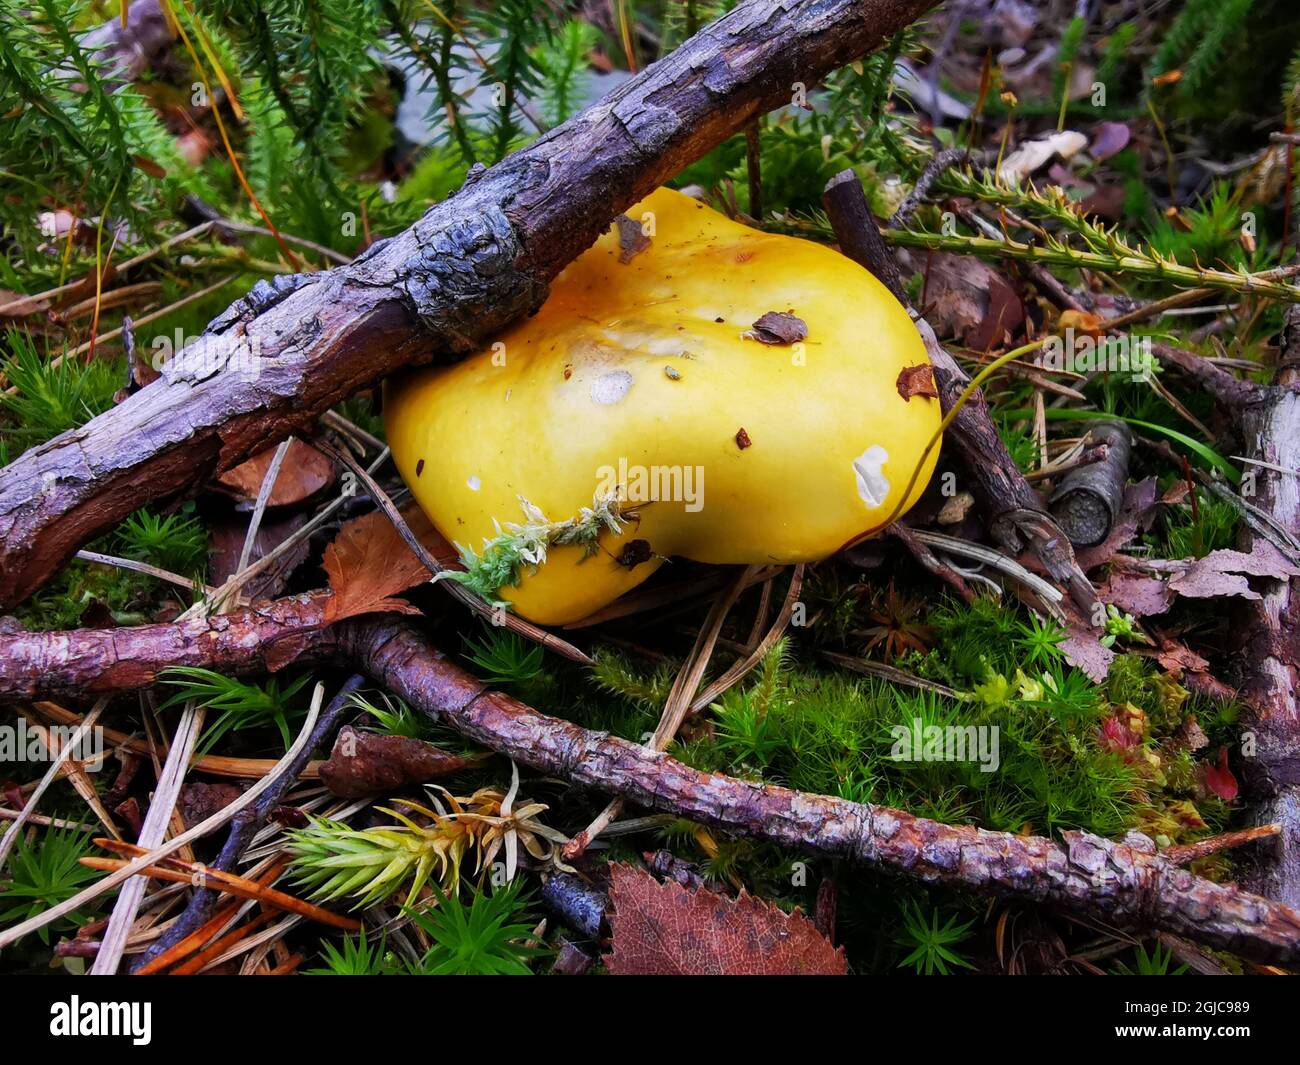 Closeup sot of a gilded brittlegill (Russula aurea) mushroom in the forest Stock Photo